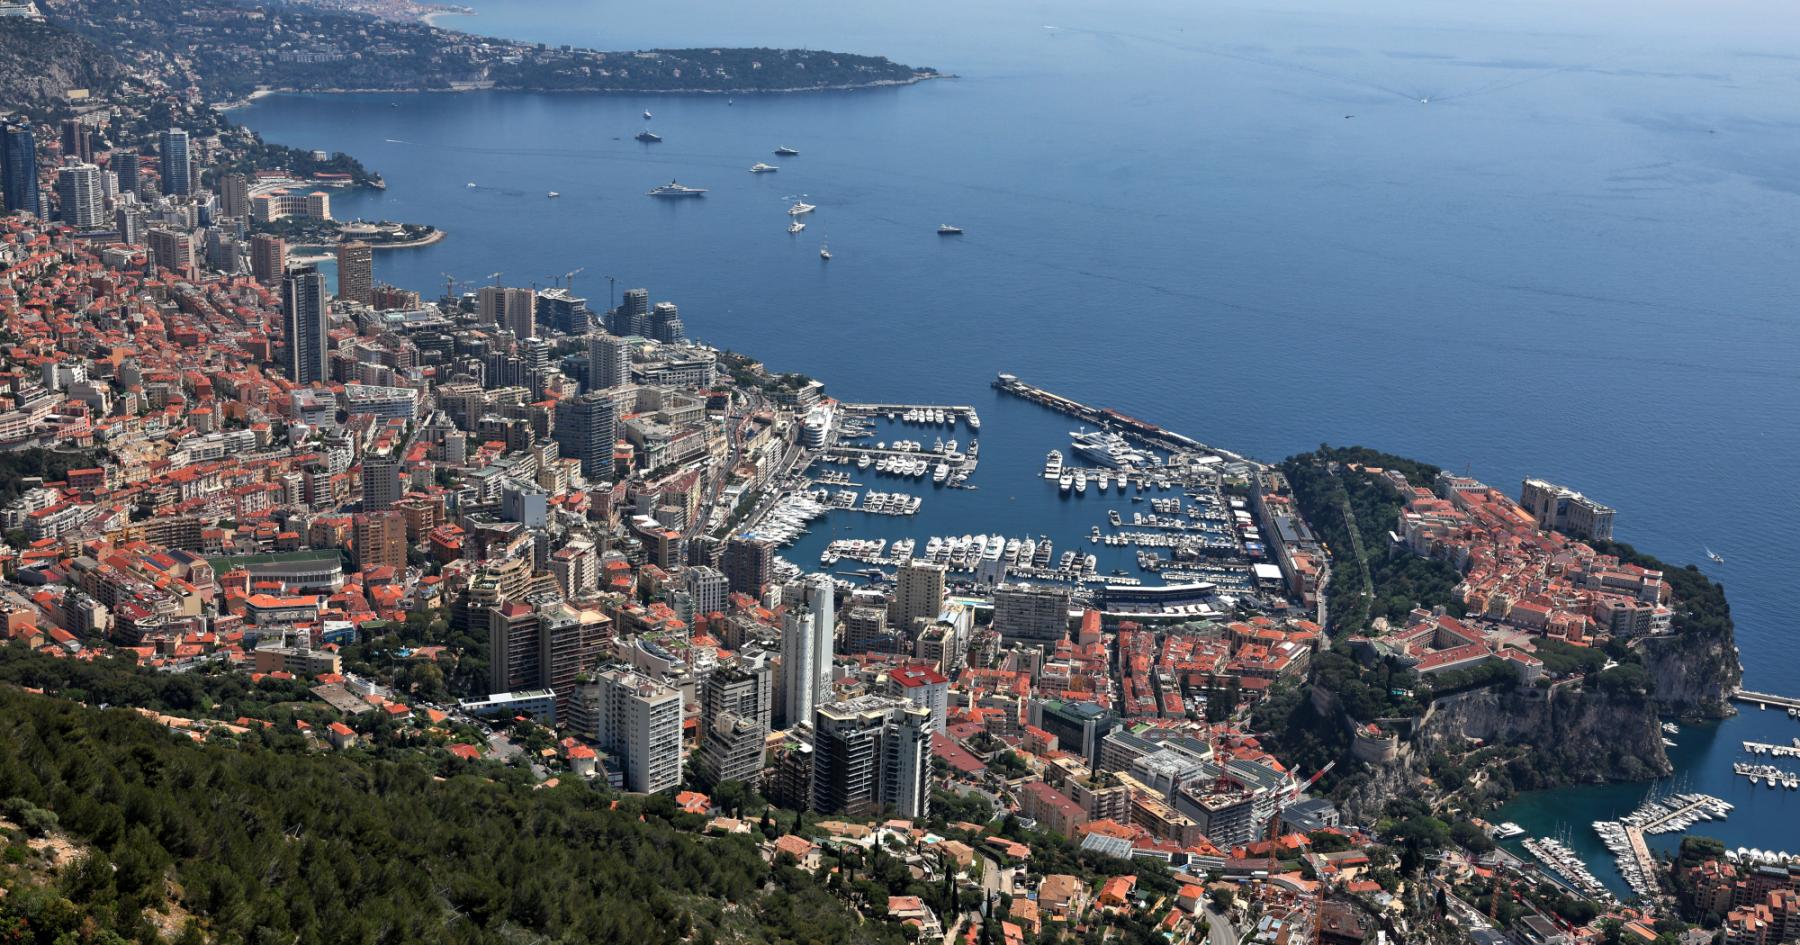 Is rain set to disrupt the Monaco GP weekend?